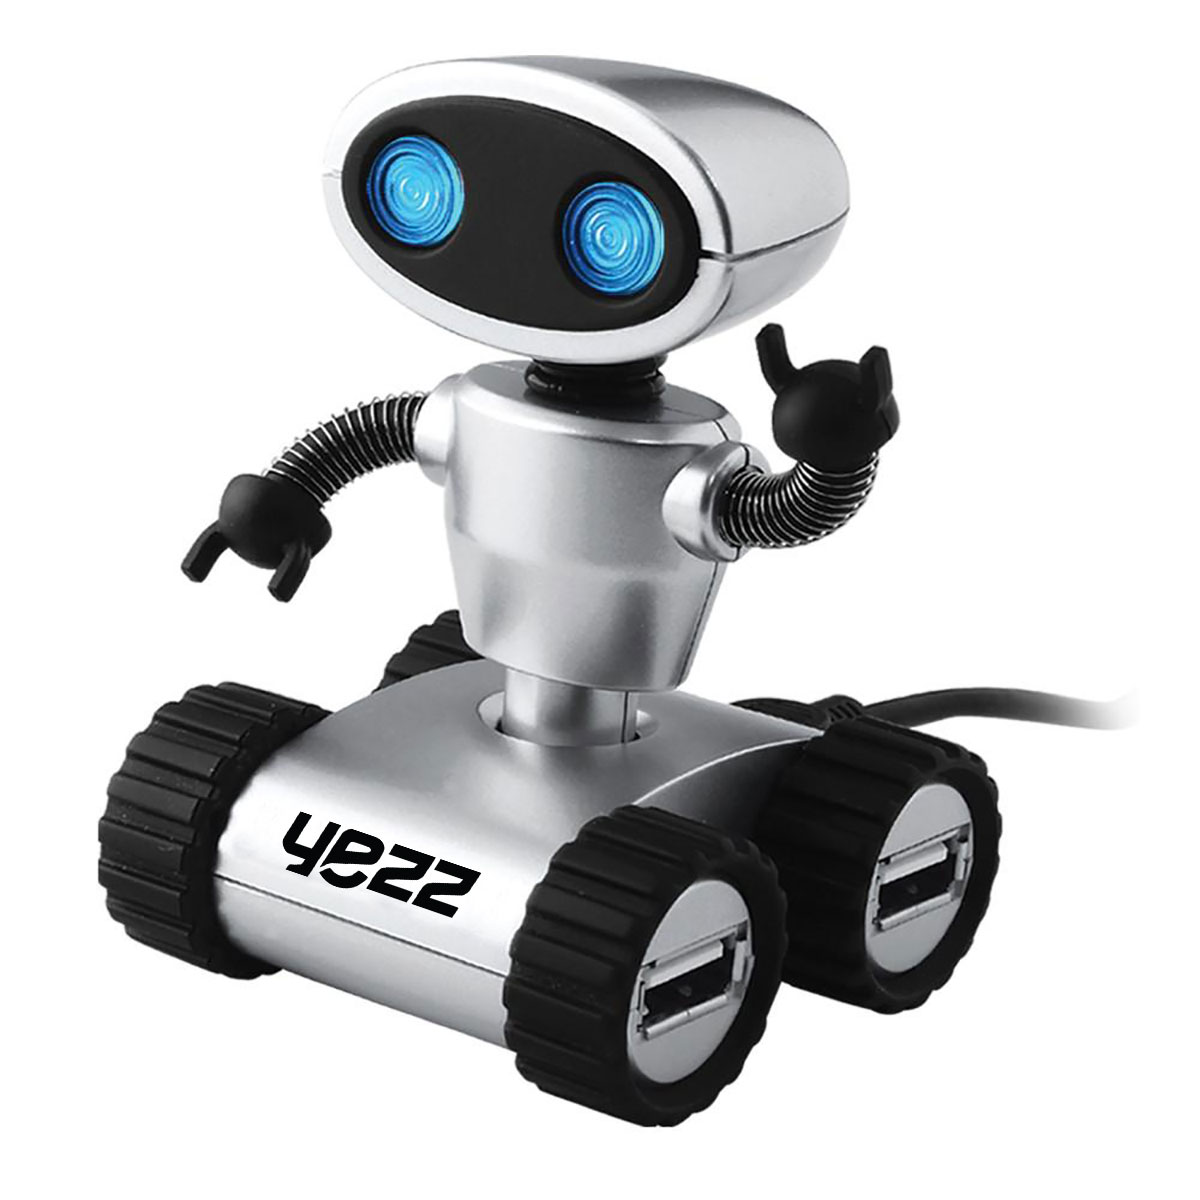 ROBOT 4-PORT USB 2.0 HUB